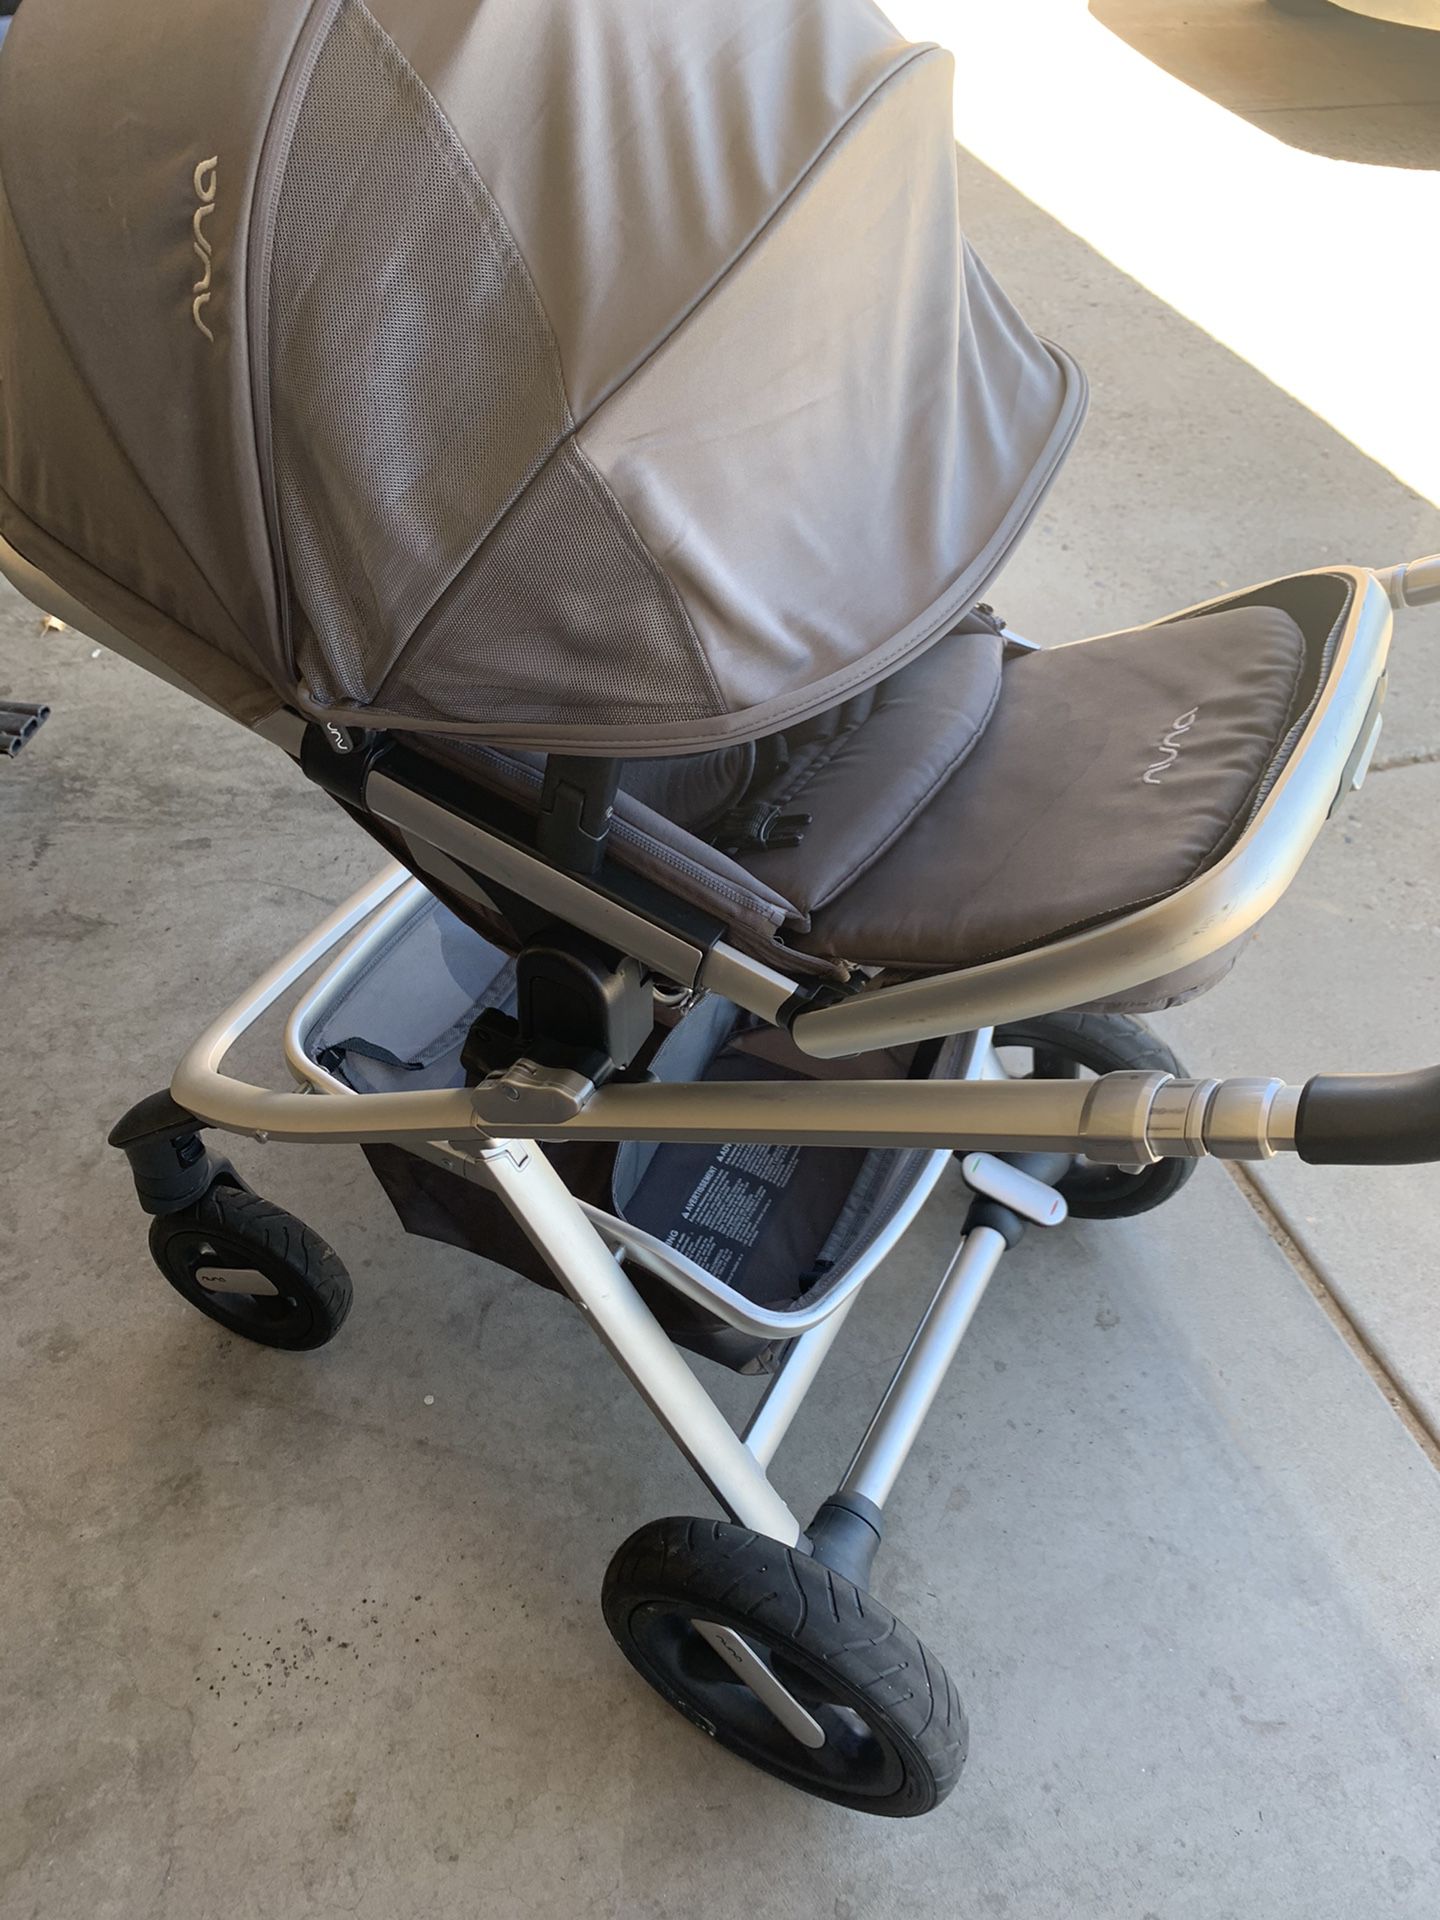 NUNA stroller multi adjustable seat